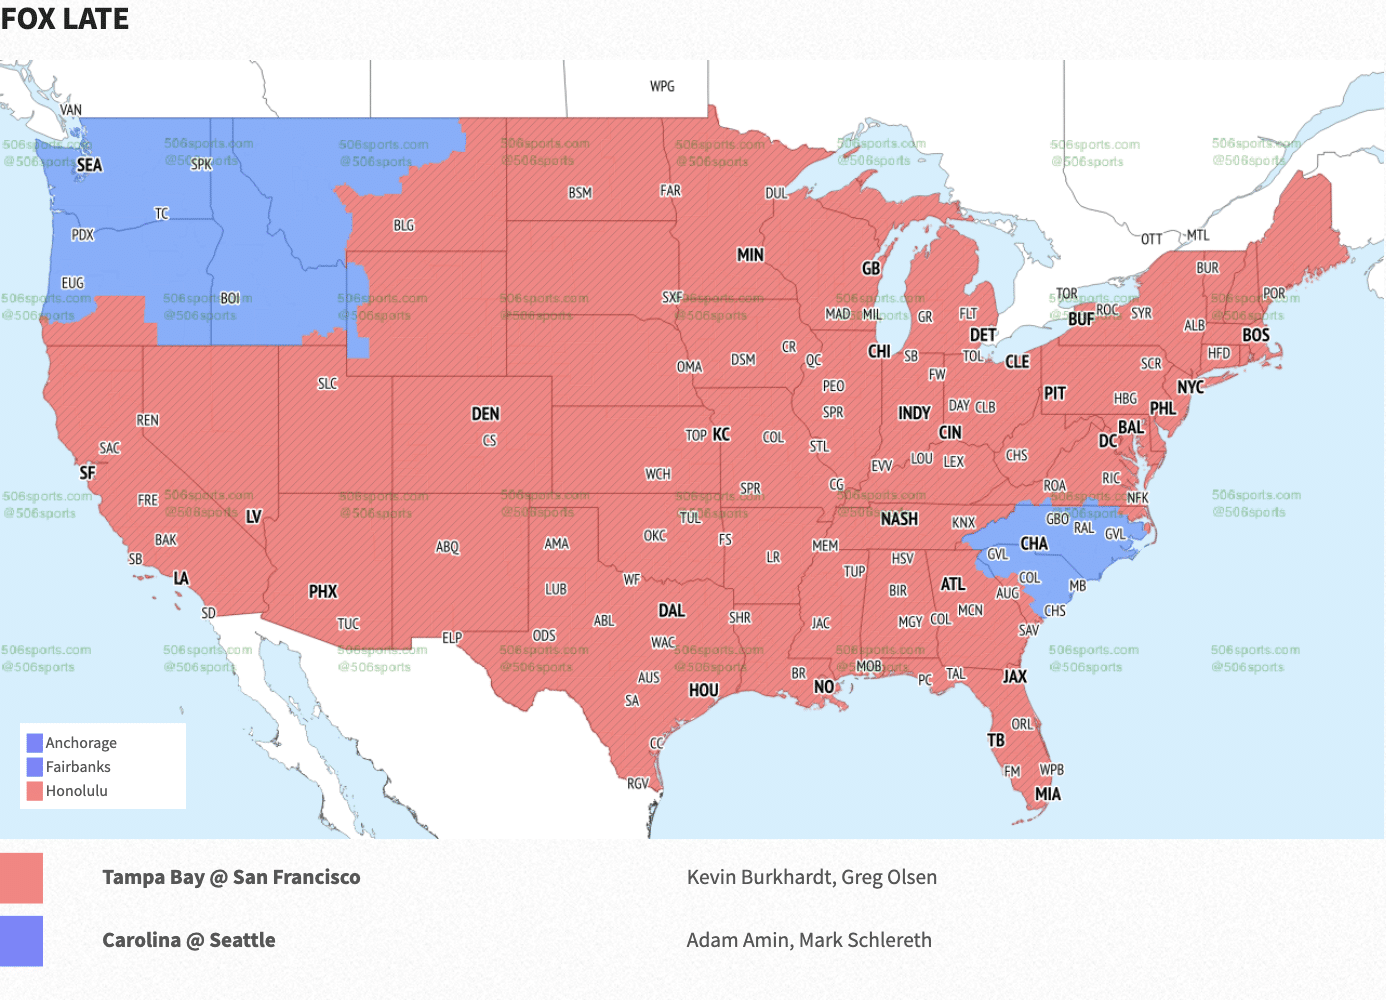 NFL Week 14 Coverage Maps